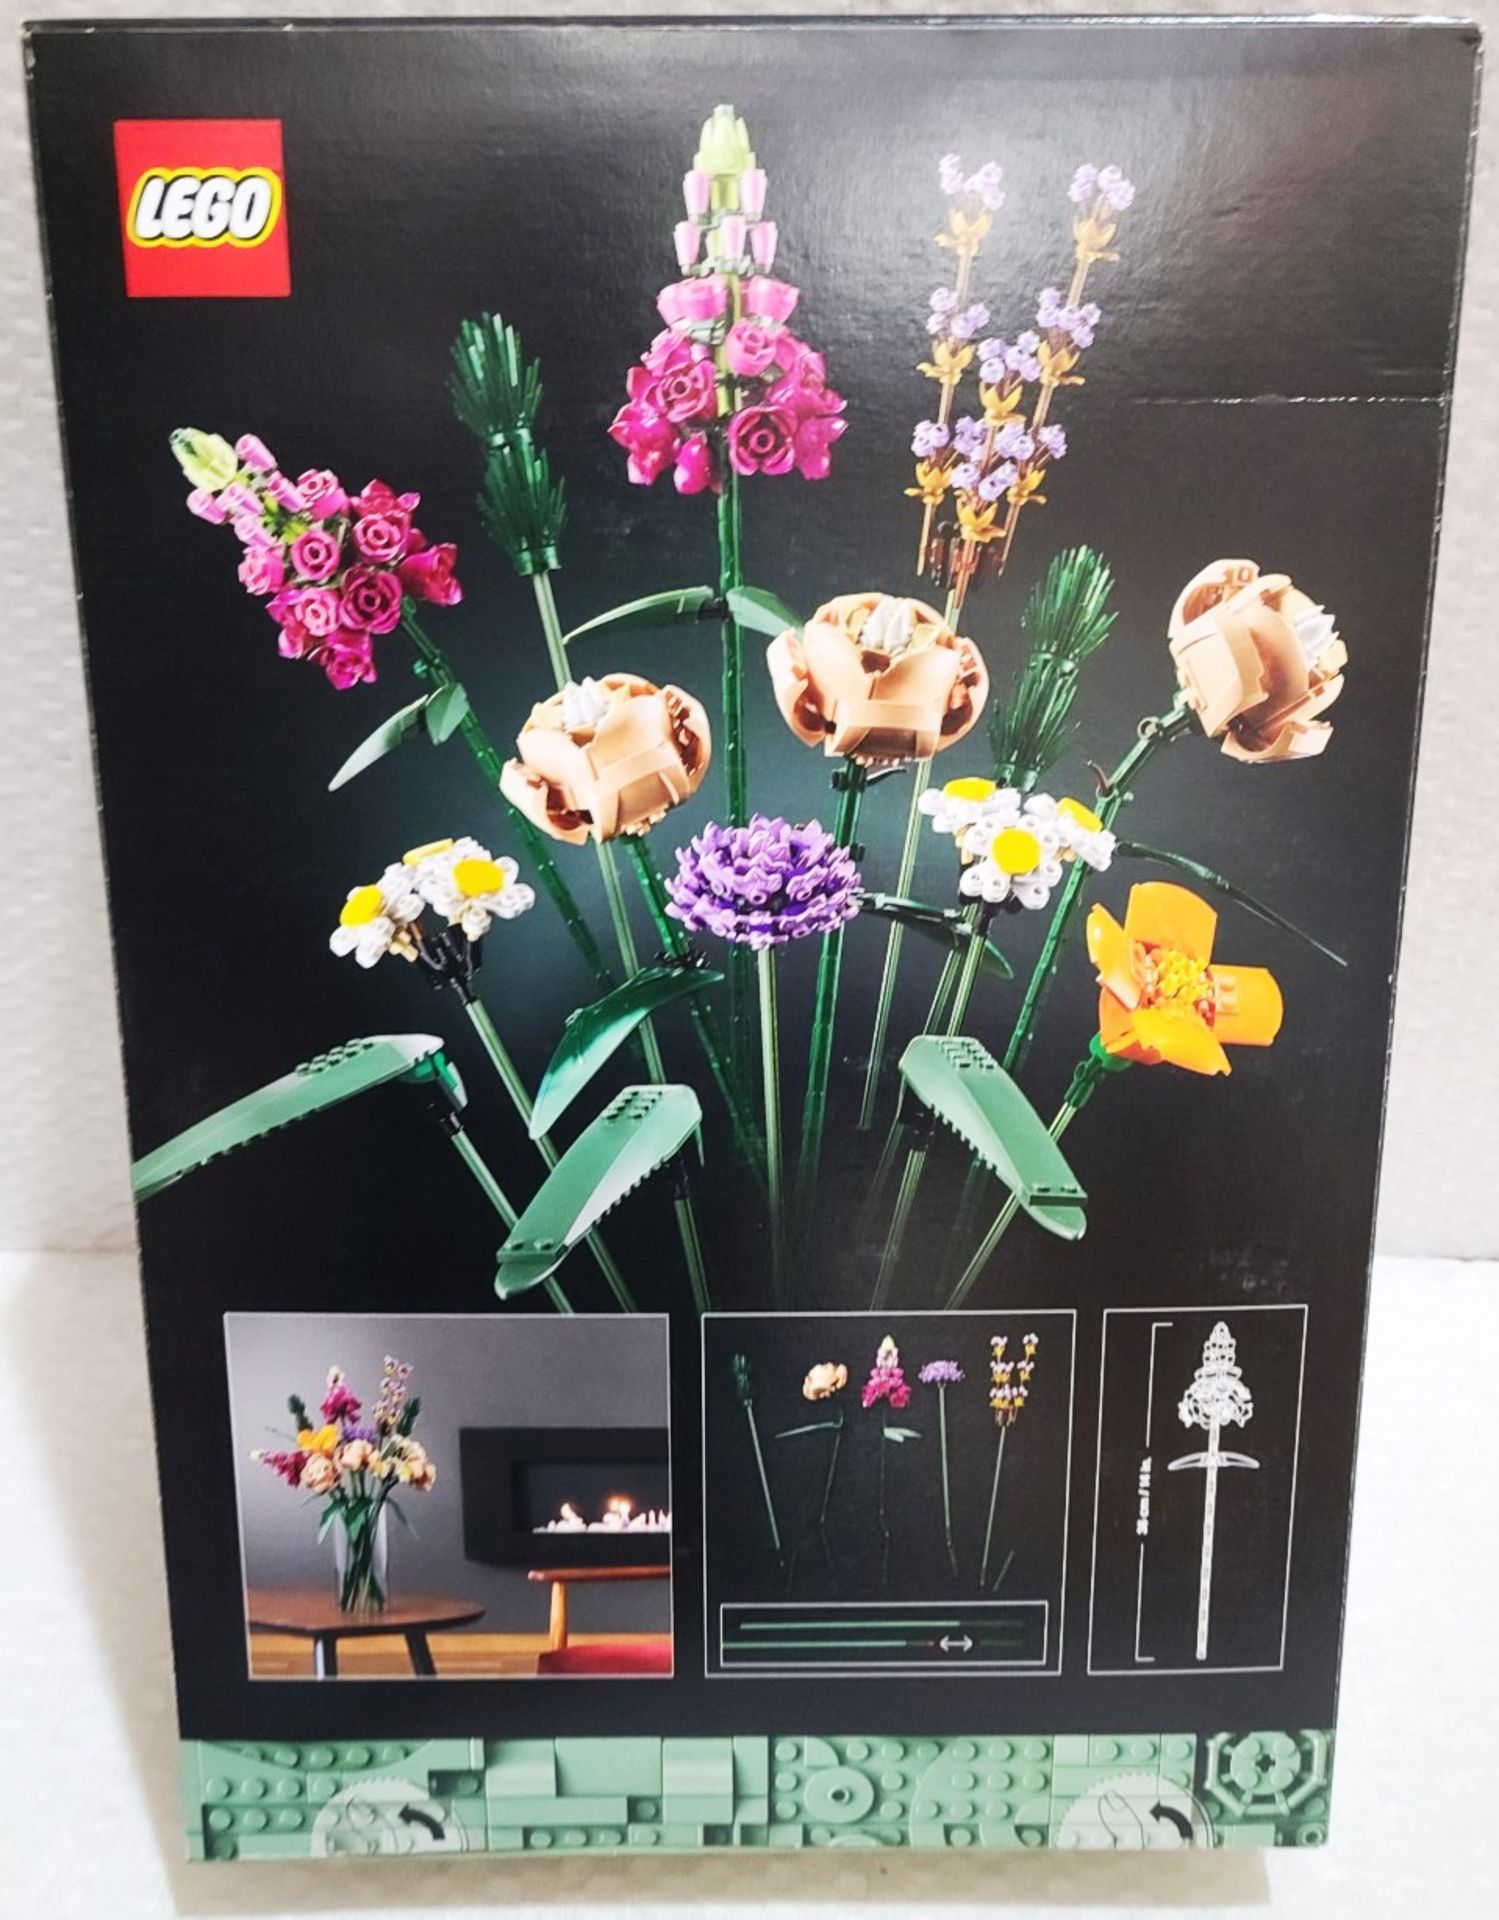 1 x LEGO Creator Expert Flower Bouquet Set 10280 - Original Price £54.95 - Unused Boxed Stock - Ref: - Image 5 of 5